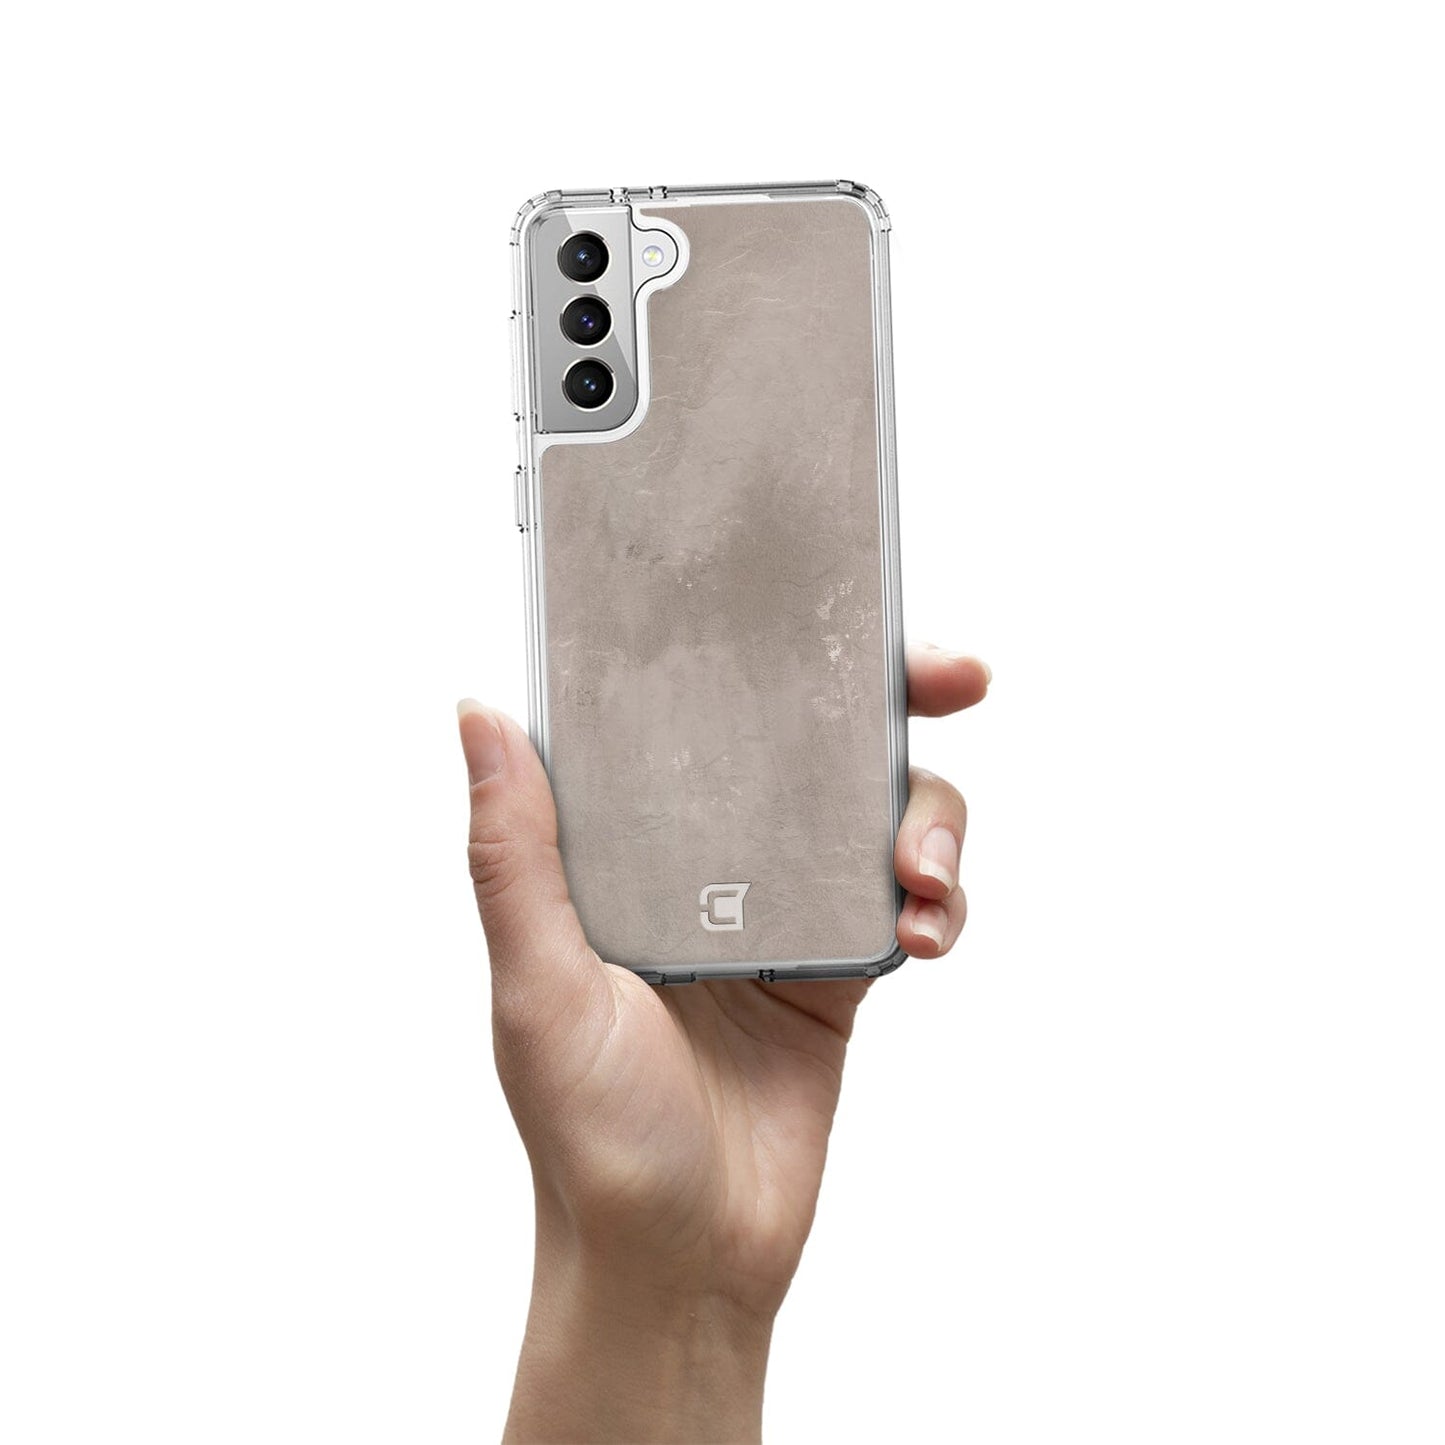 Samsung Galaxy S21 Plus Case - Concrete Texture Design